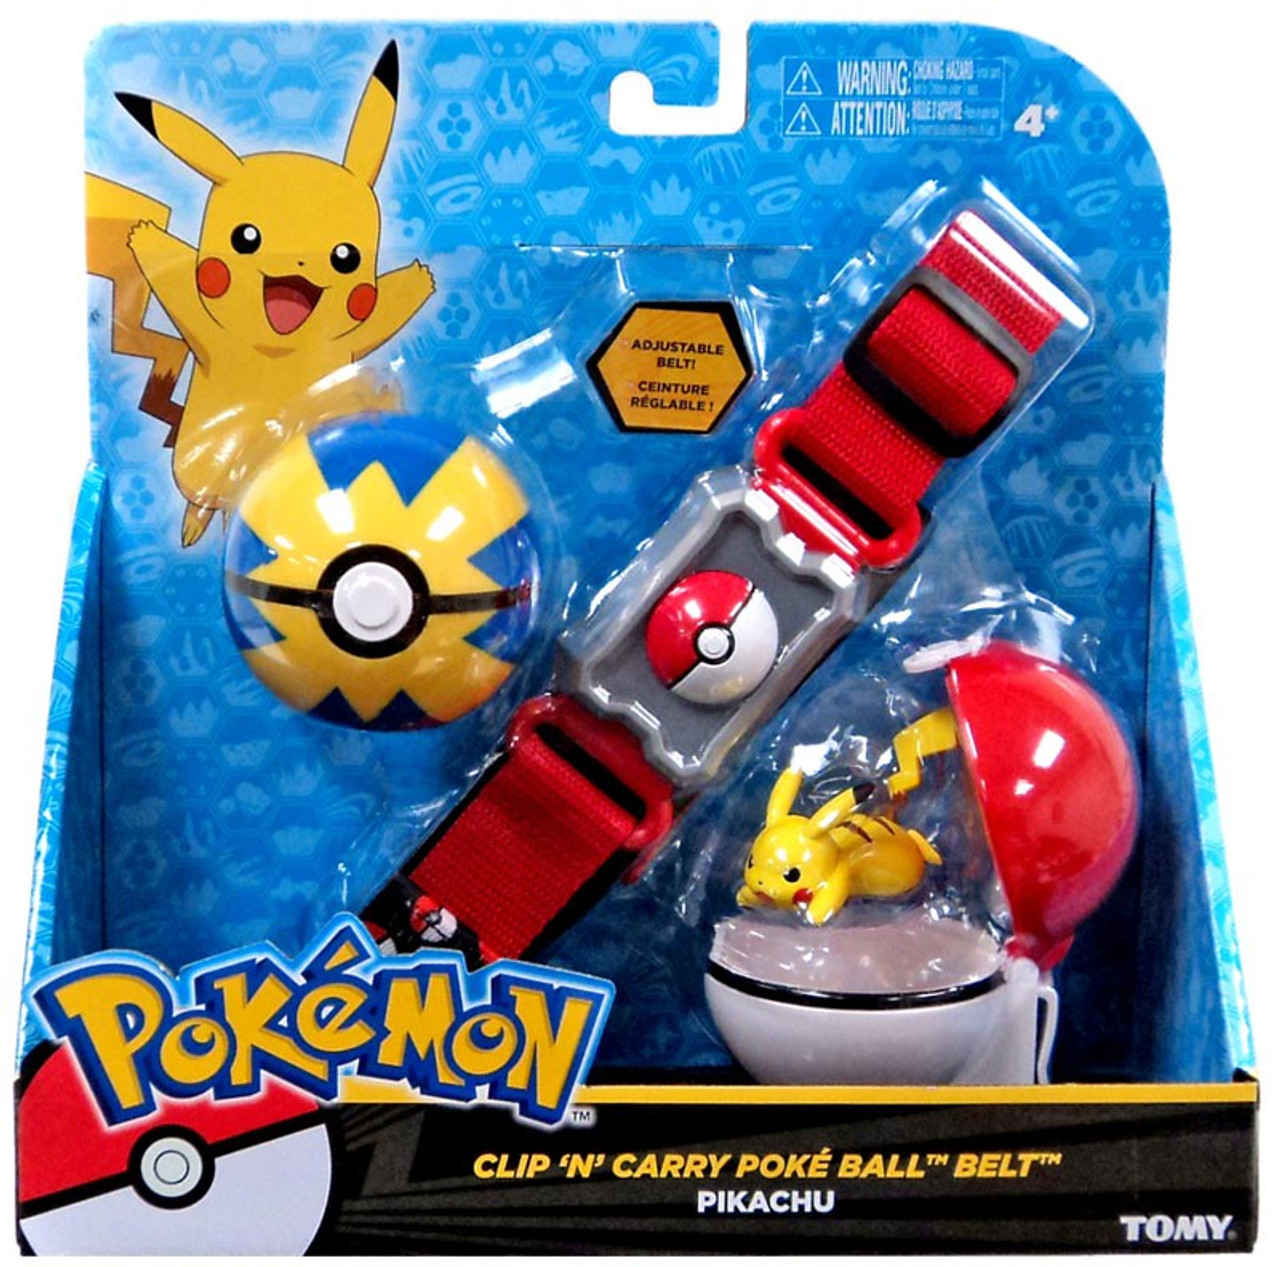 Pokemon Pikachu Quick Ball Clip N Carry Poke Ball Belt